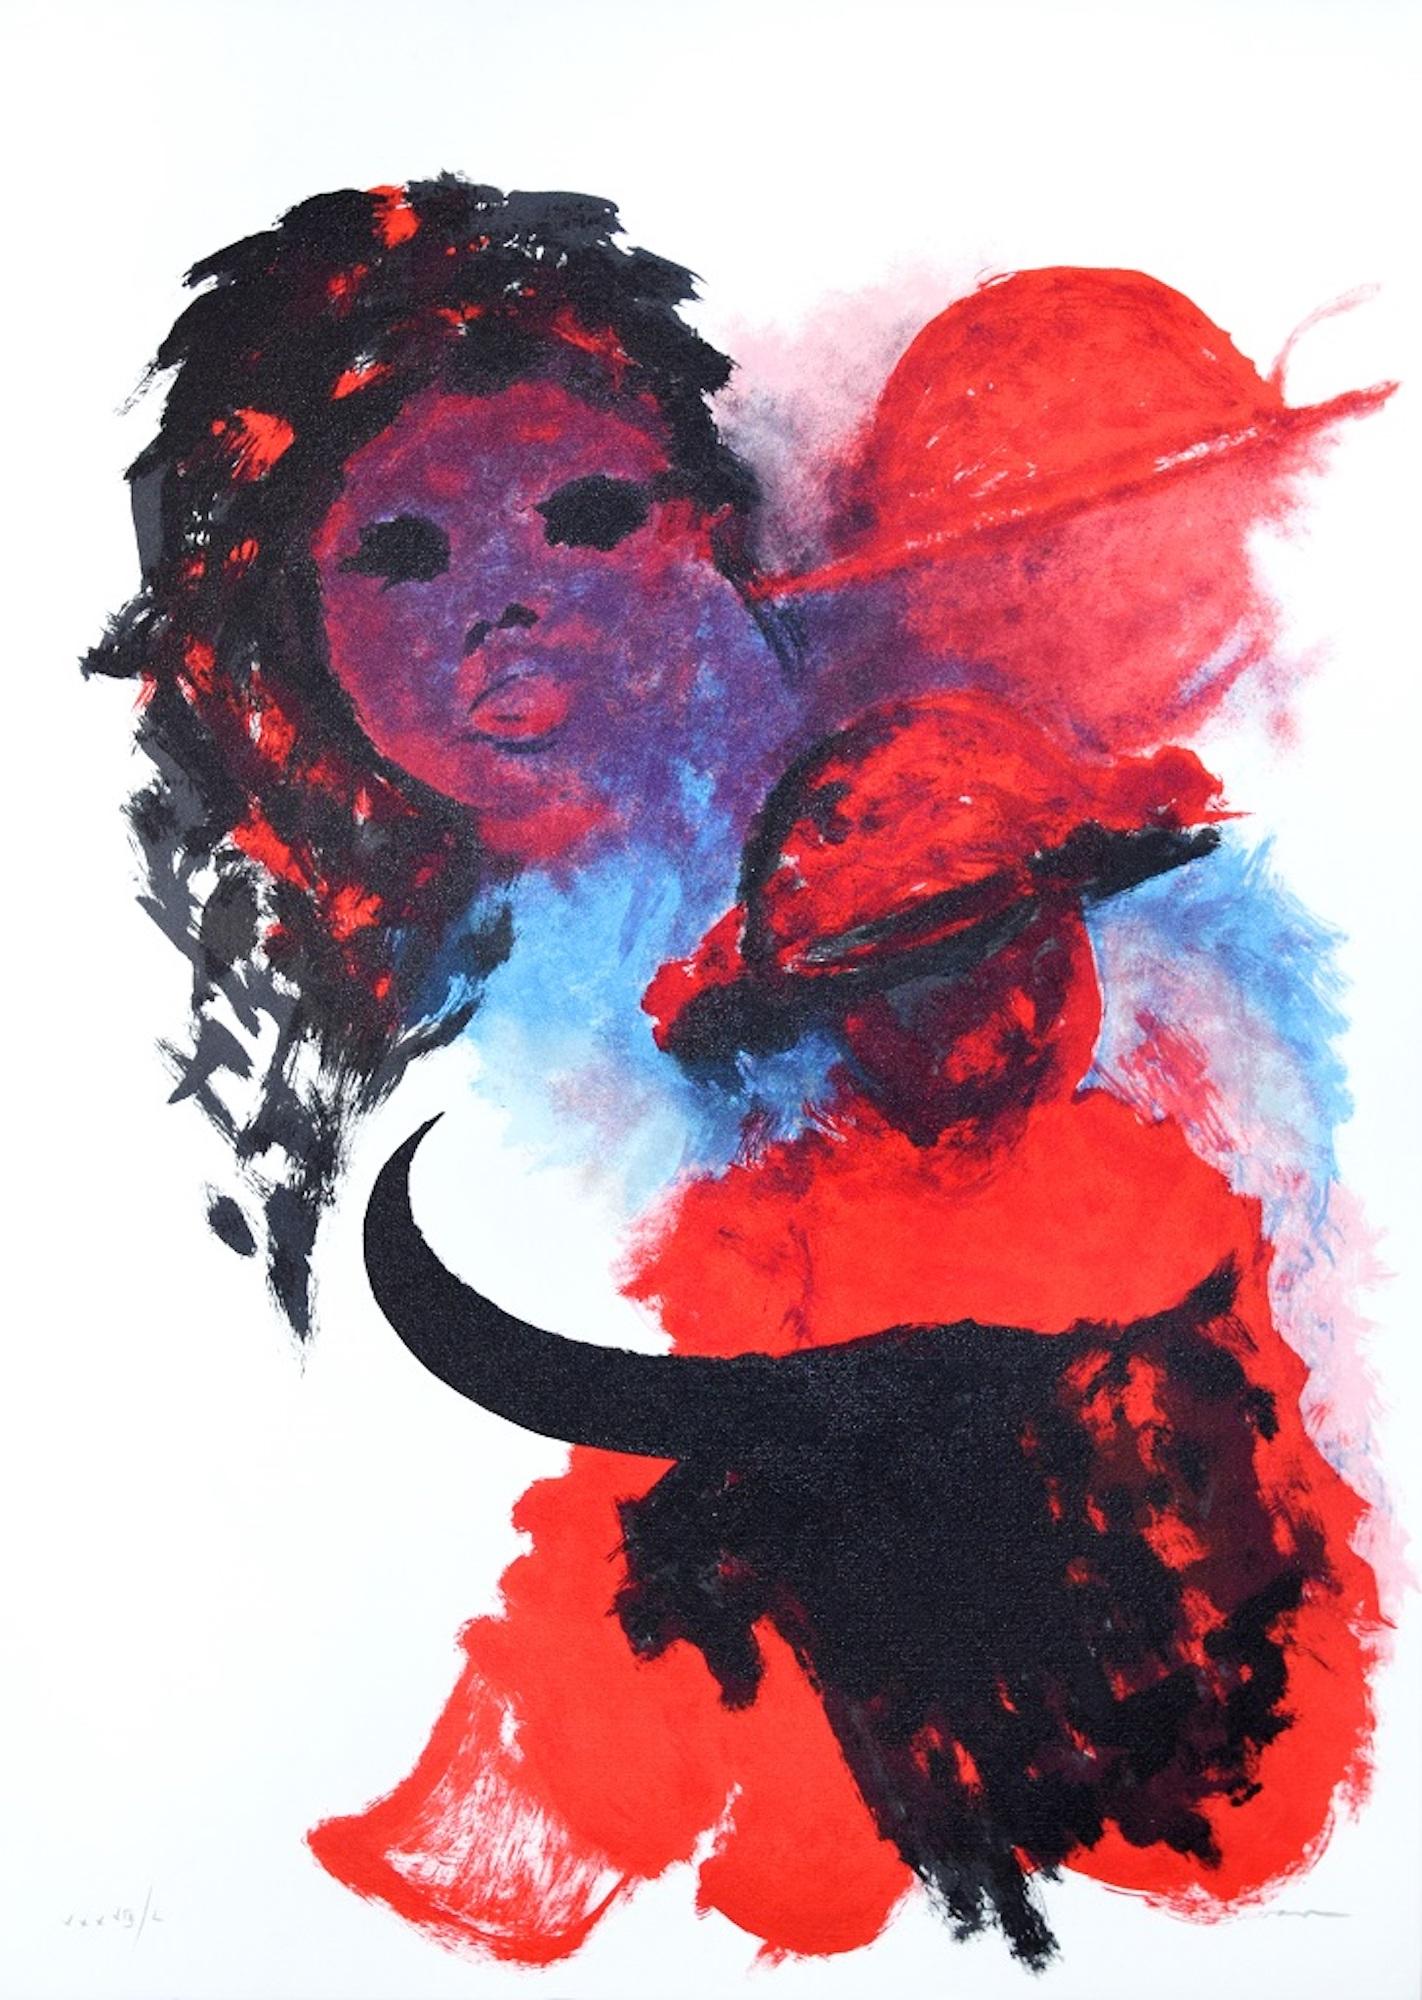 The Spanish Woman - Original Lithograph by José Guevara - 1990s